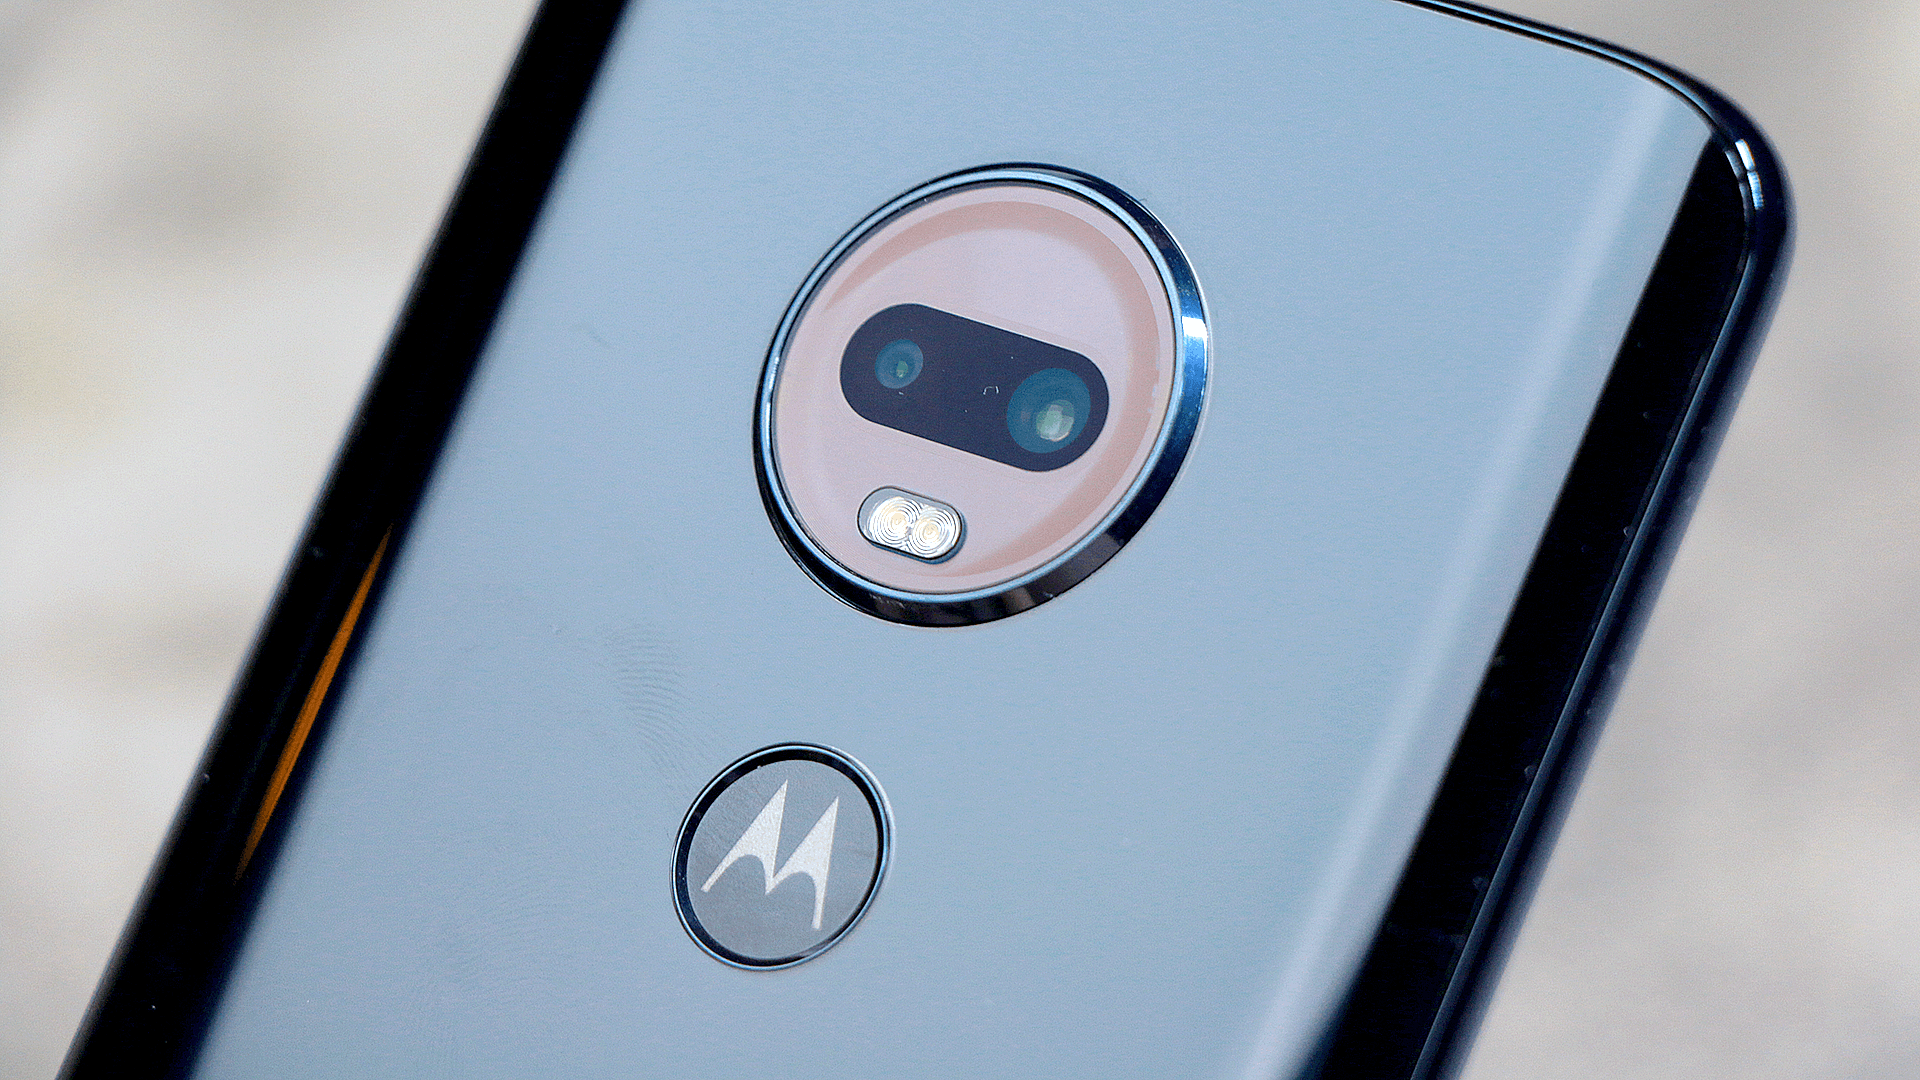 Moto G7 Plus camera should gain night vision mode equal to Google Pixel